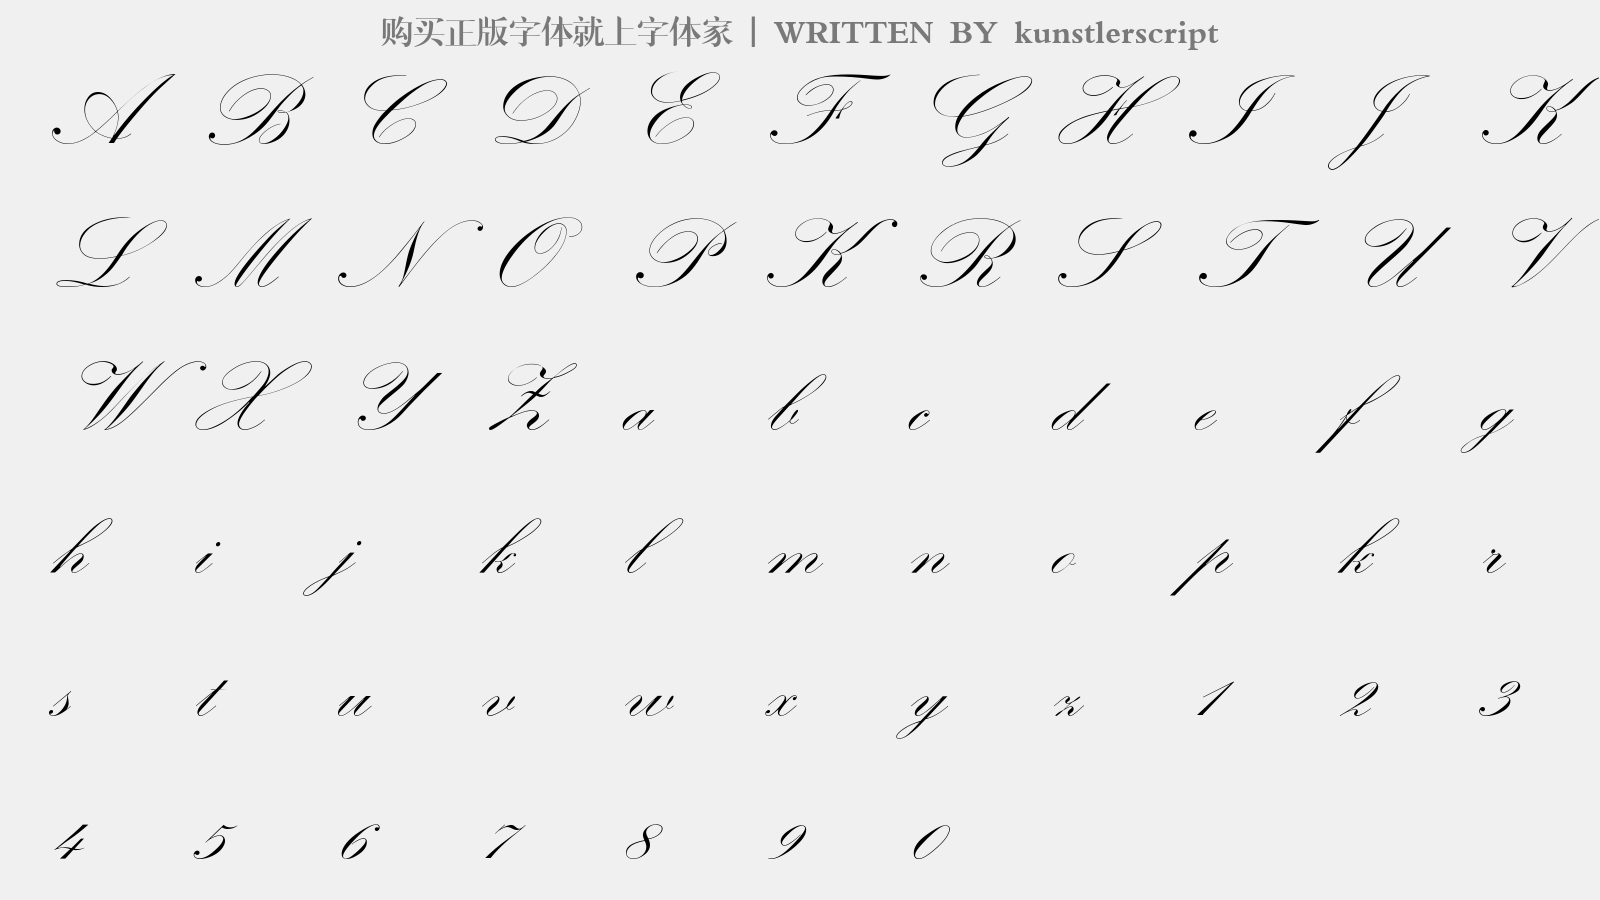 kunstlerscript - 大写字母/小写字母/数字